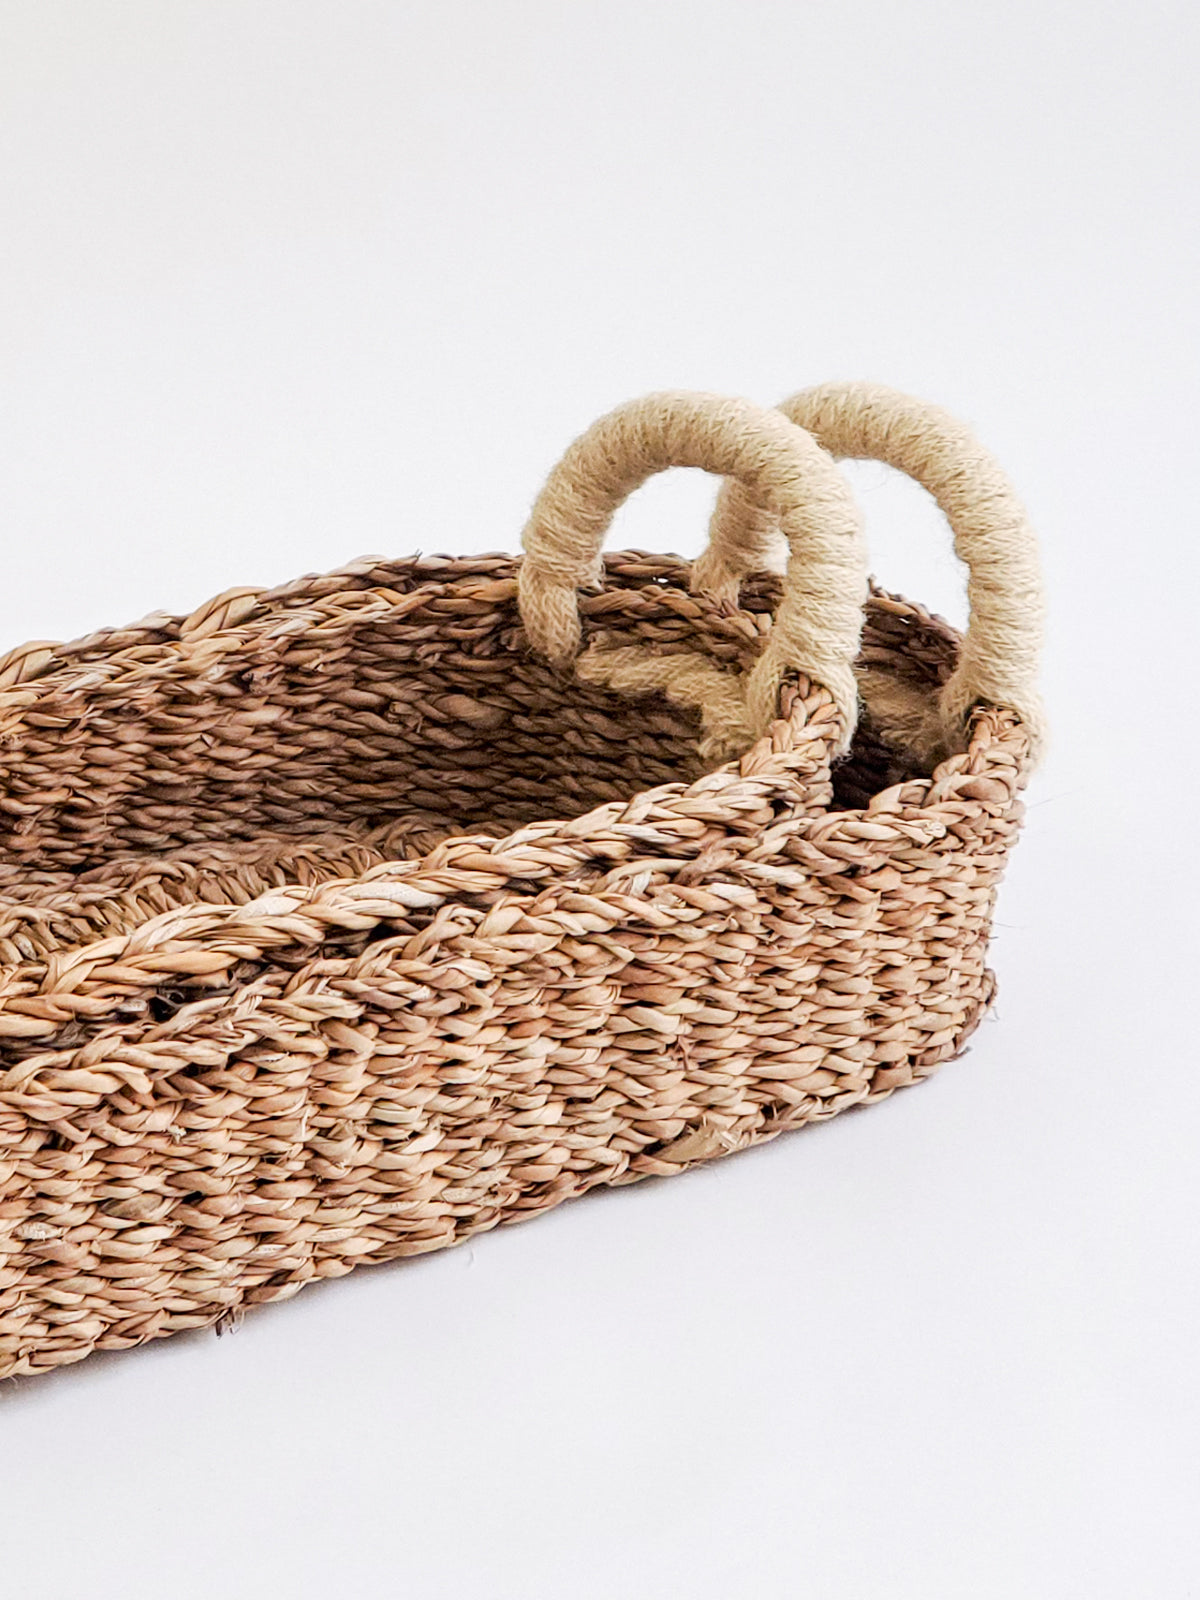  Savar Bread Basket with White Handle by KORISSA KORISSA Perfumarie